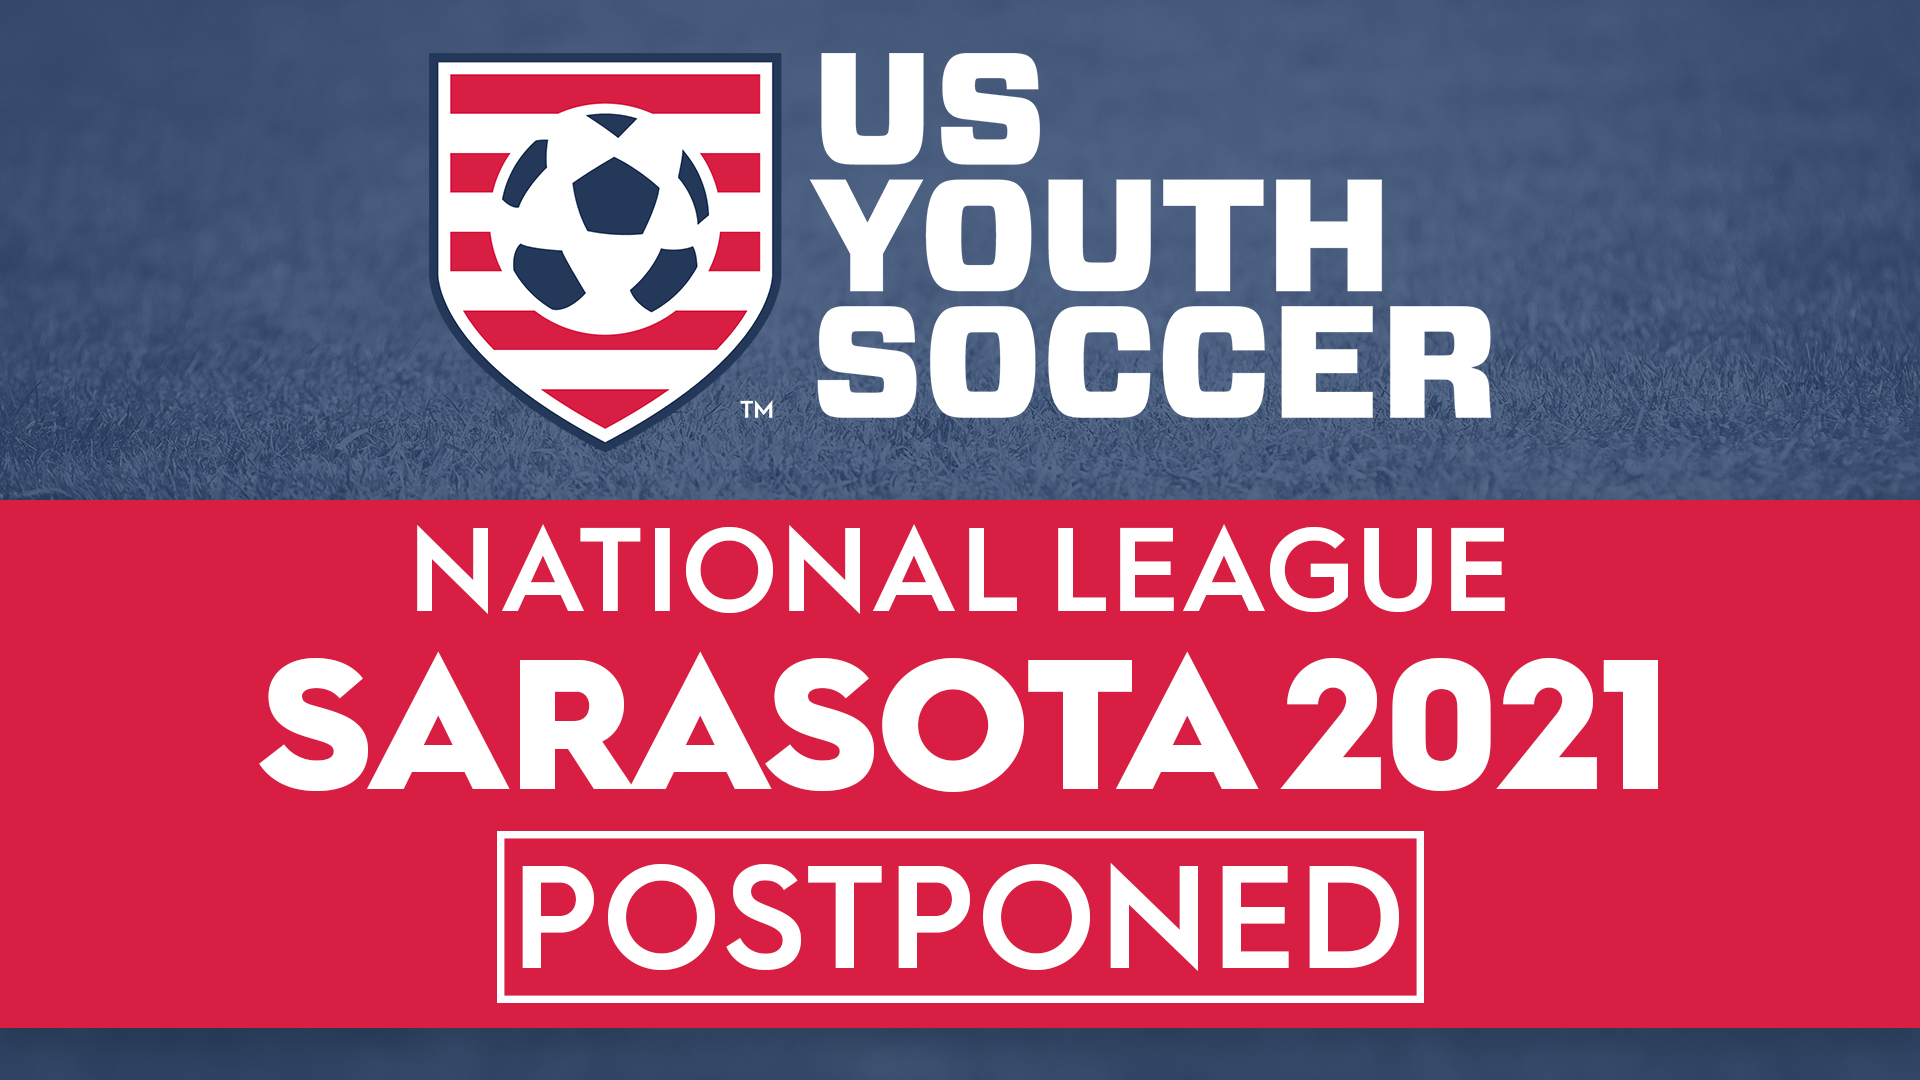 National League Sarasota postponed